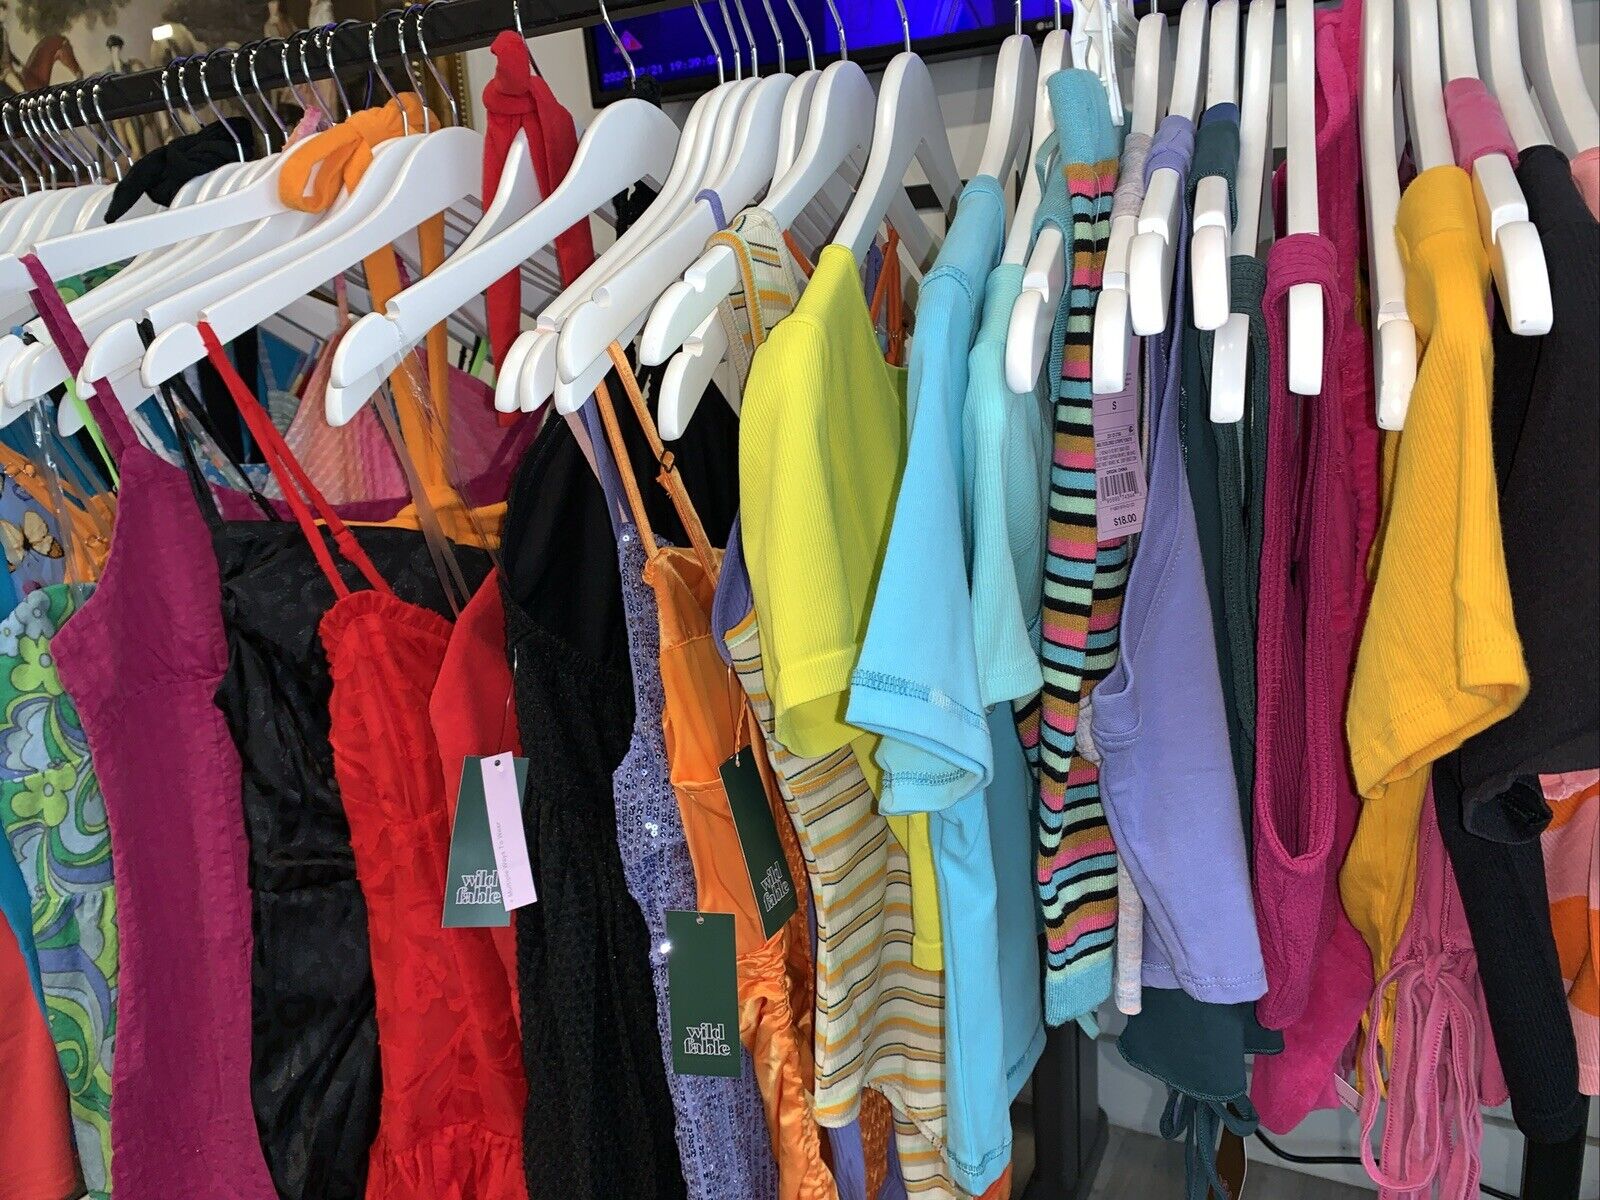 MEDIUM NEW Women’s Spring Clothing Reseller Wholesale Bundle Box Retail $200